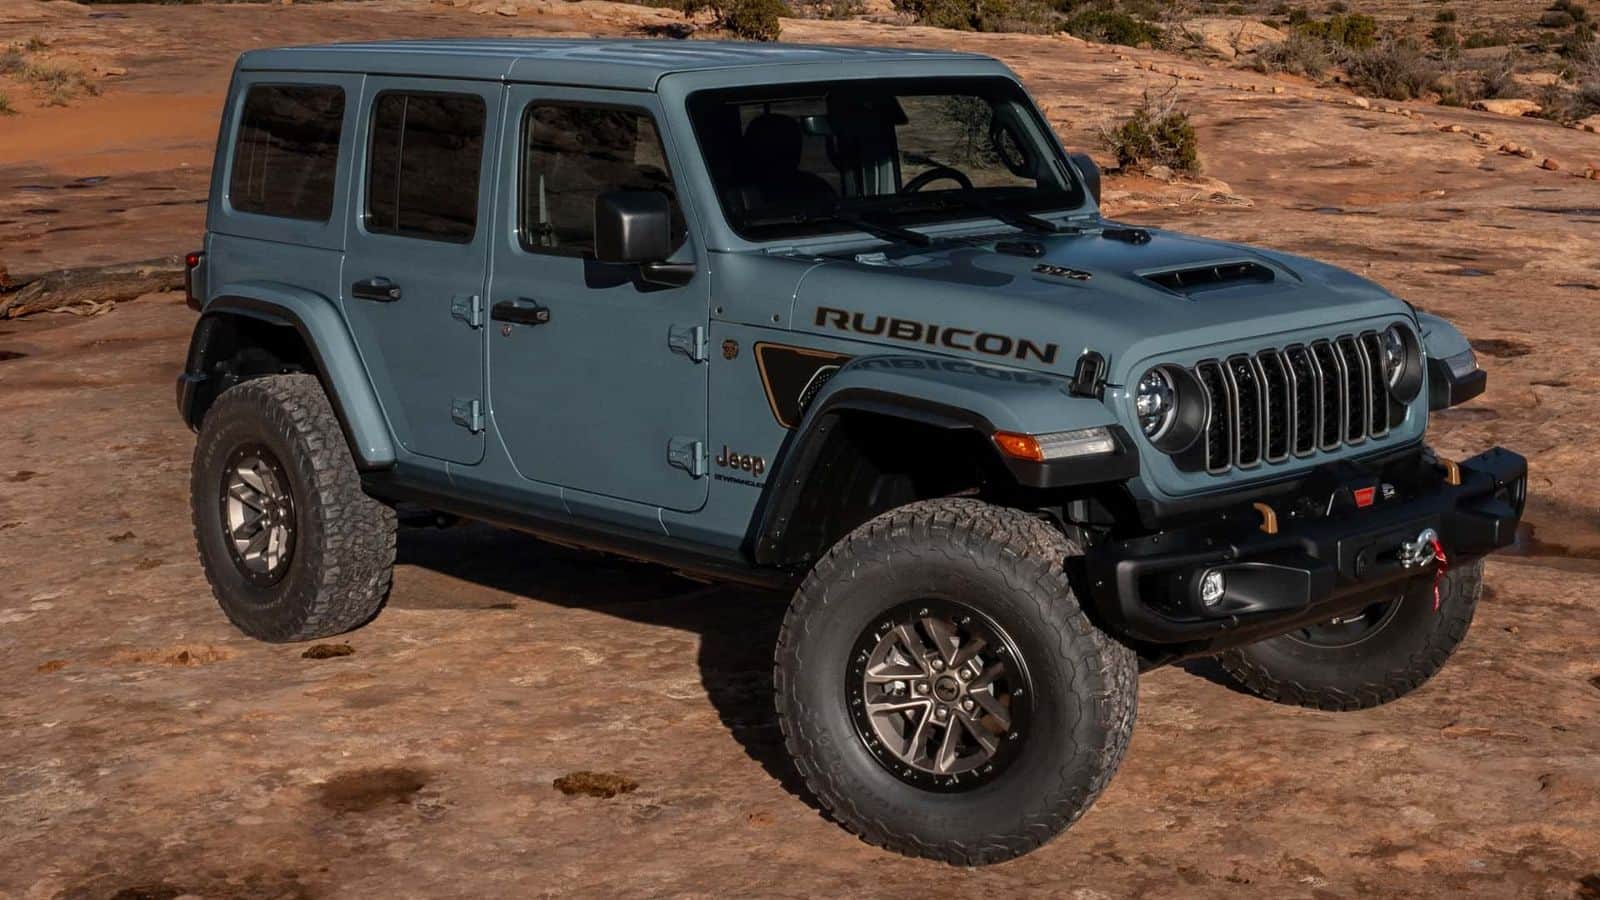 Jeep resurrects V8-powered Wrangler Rubicon due to popular demand